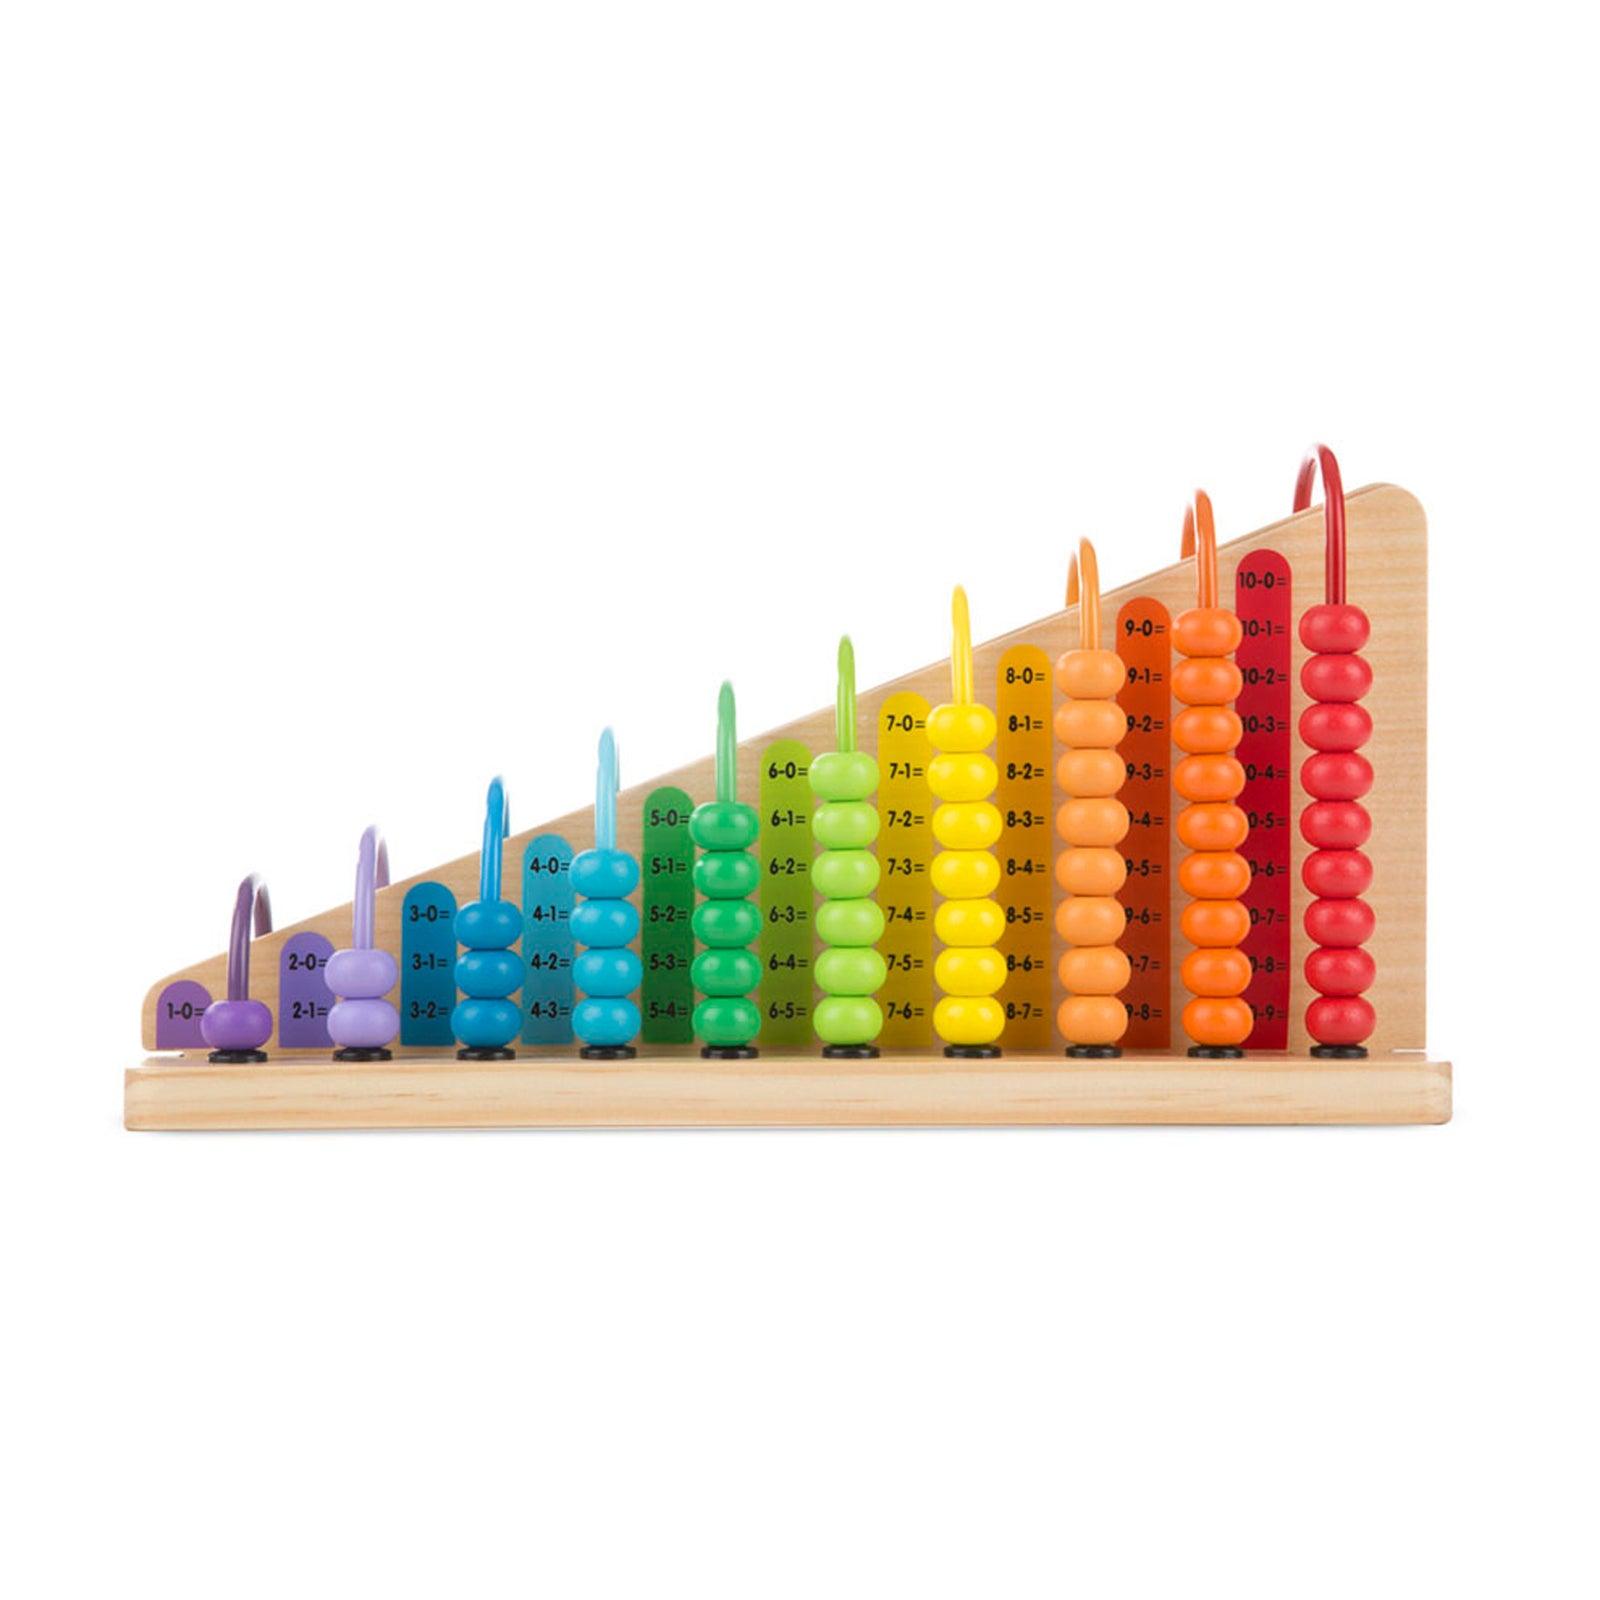 Add & Subtract Abacus - Loomini